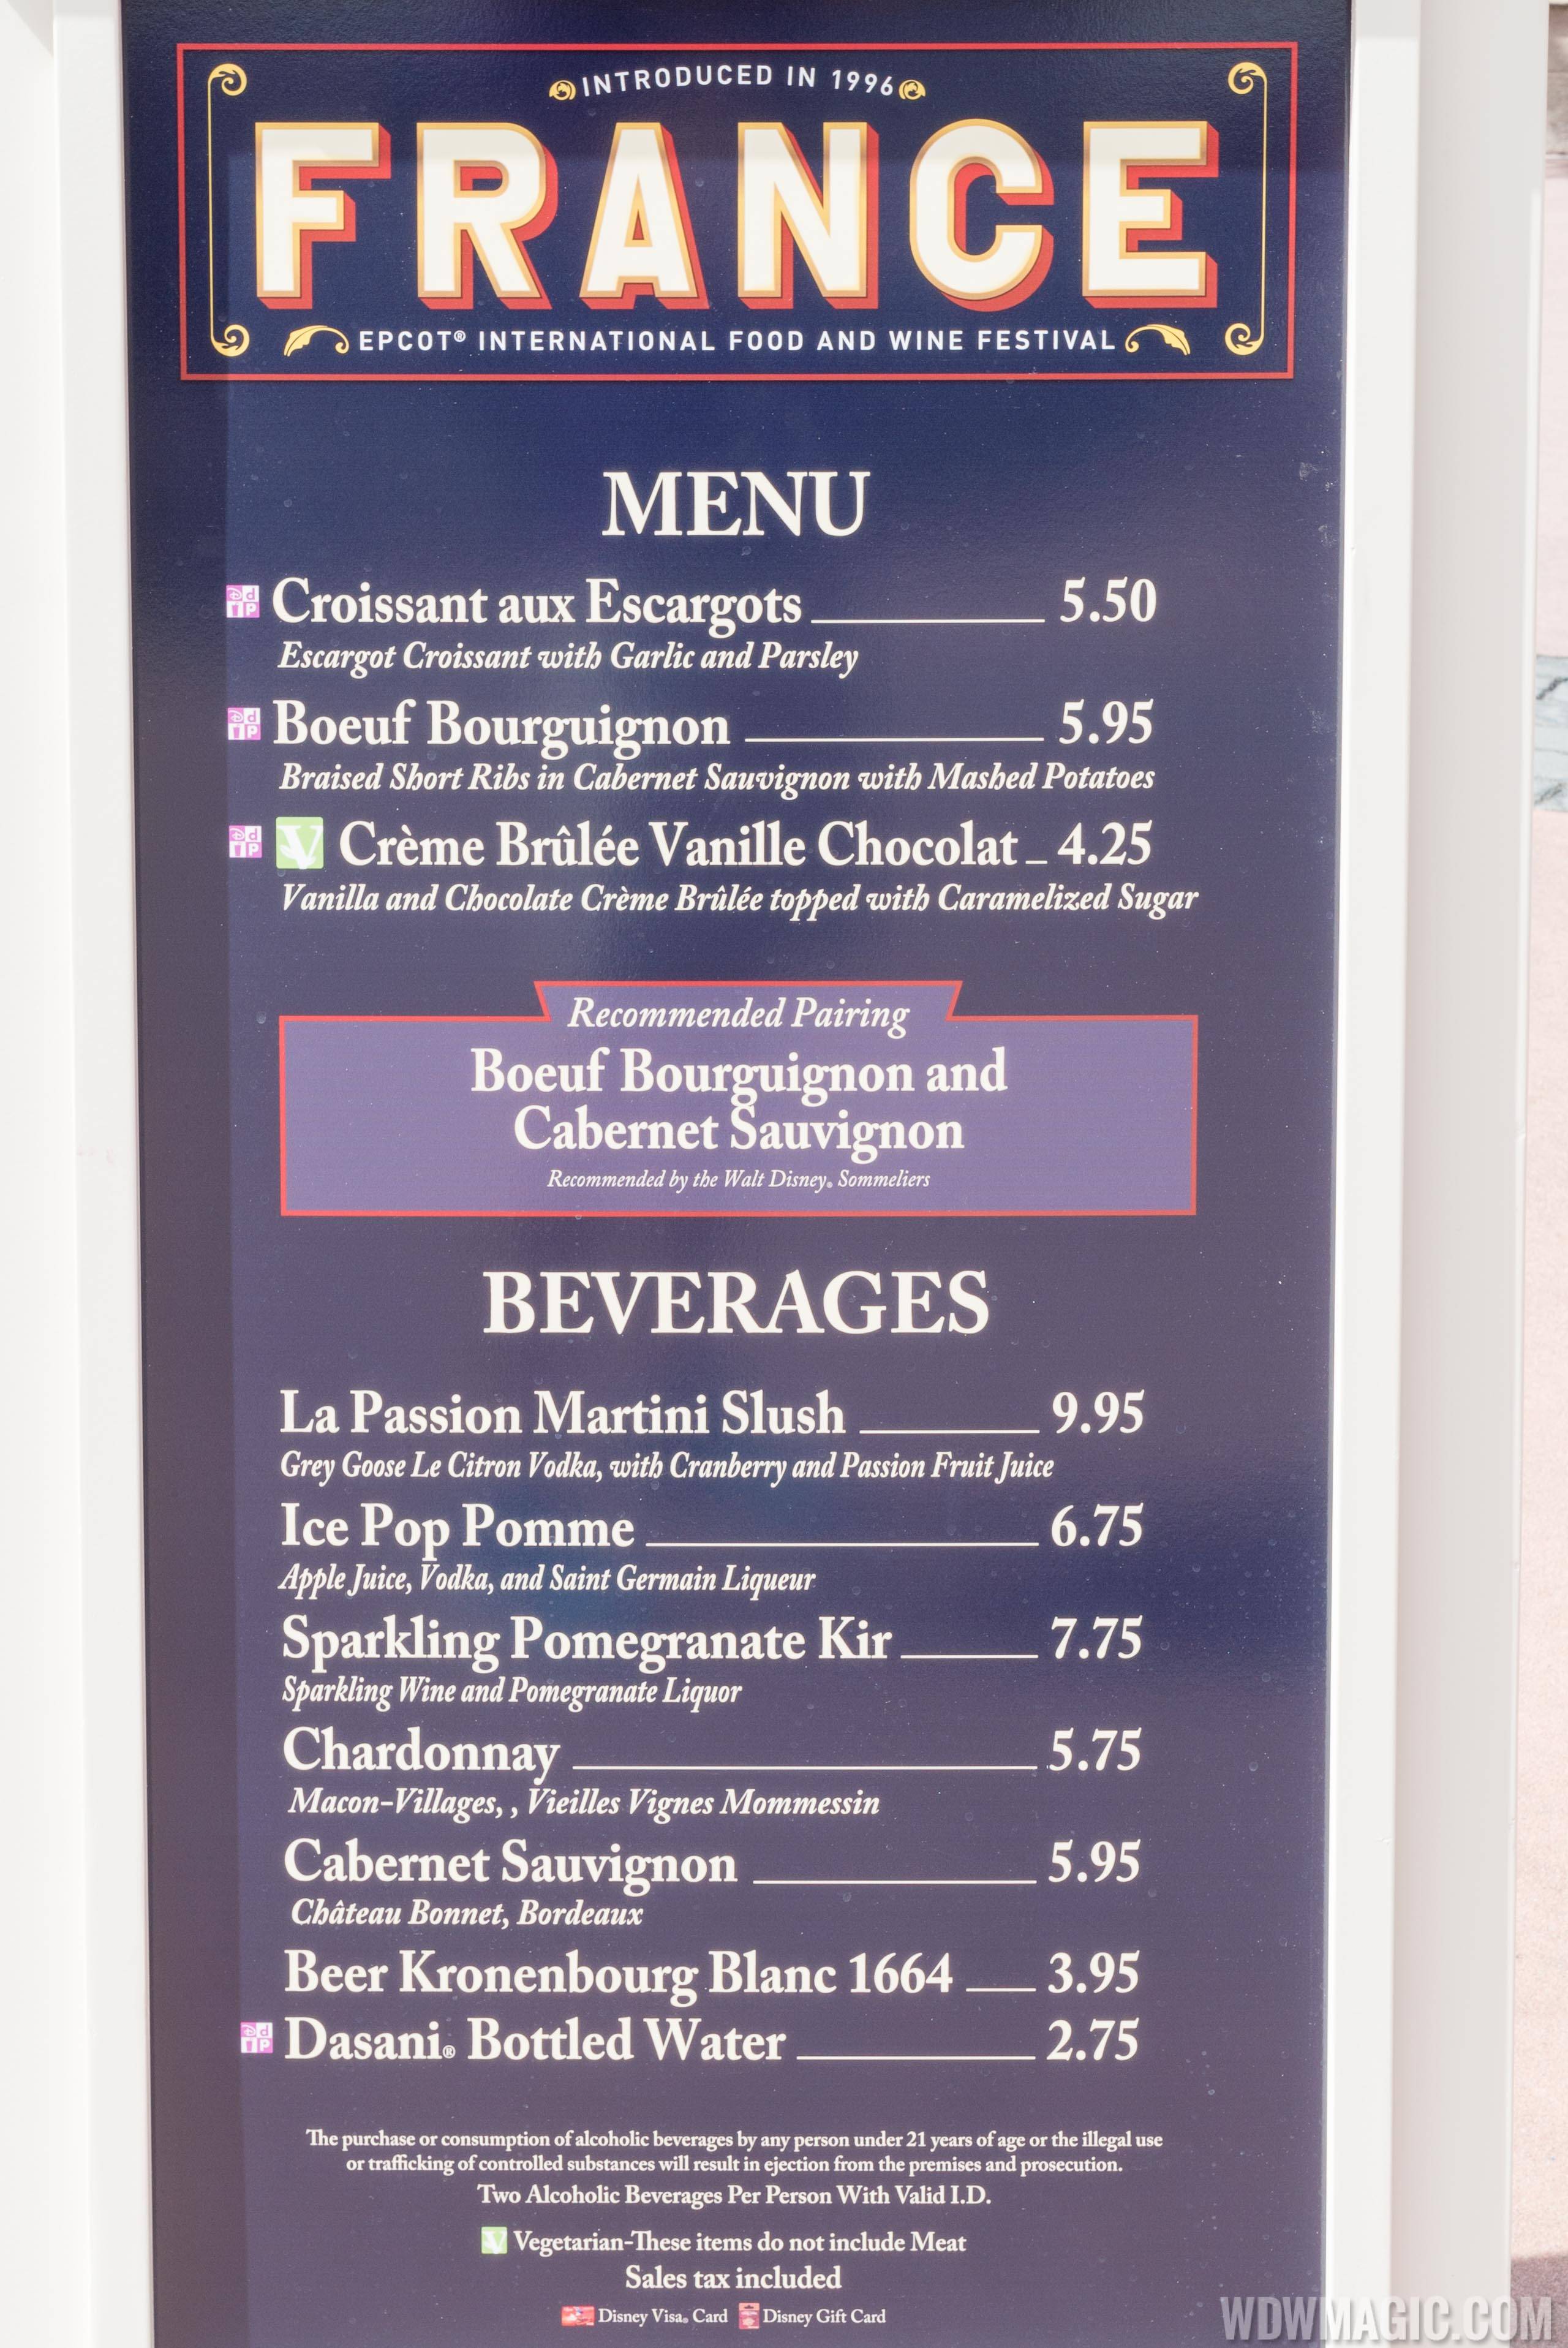 2015 Epcot Food and Wine Festival Marketplace kiosk - France menu